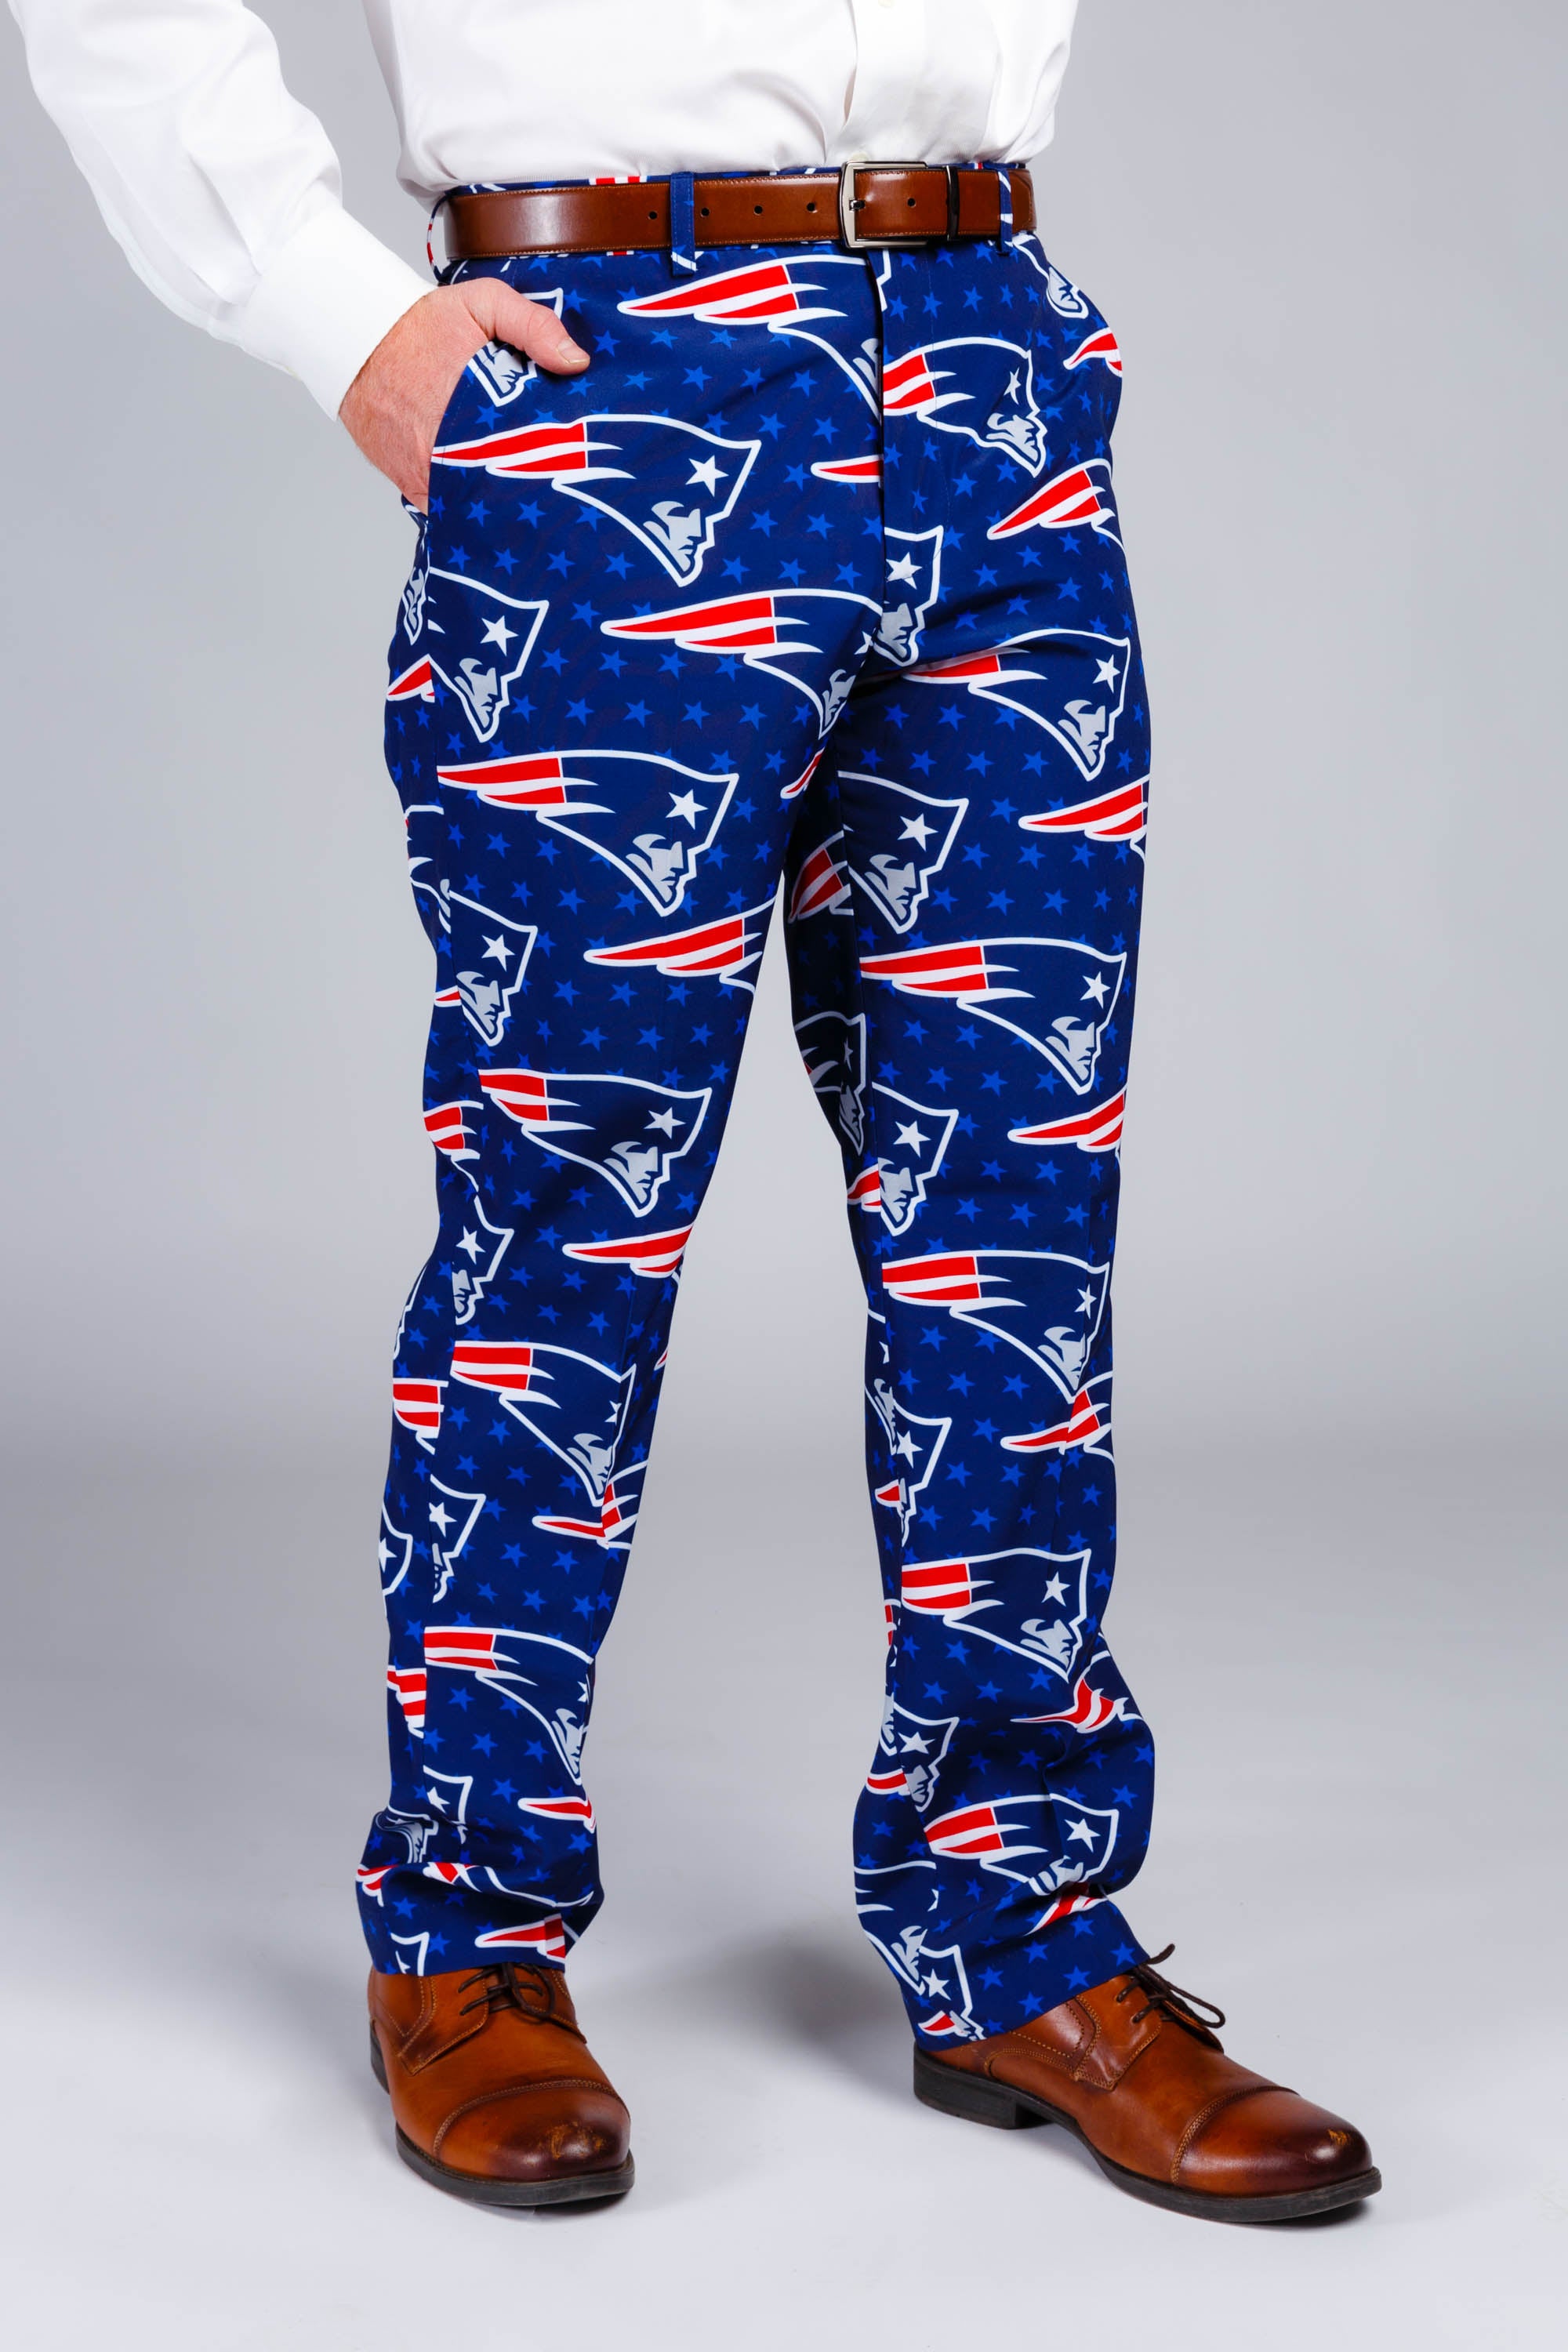 Patriots Nfl Gameday Pants